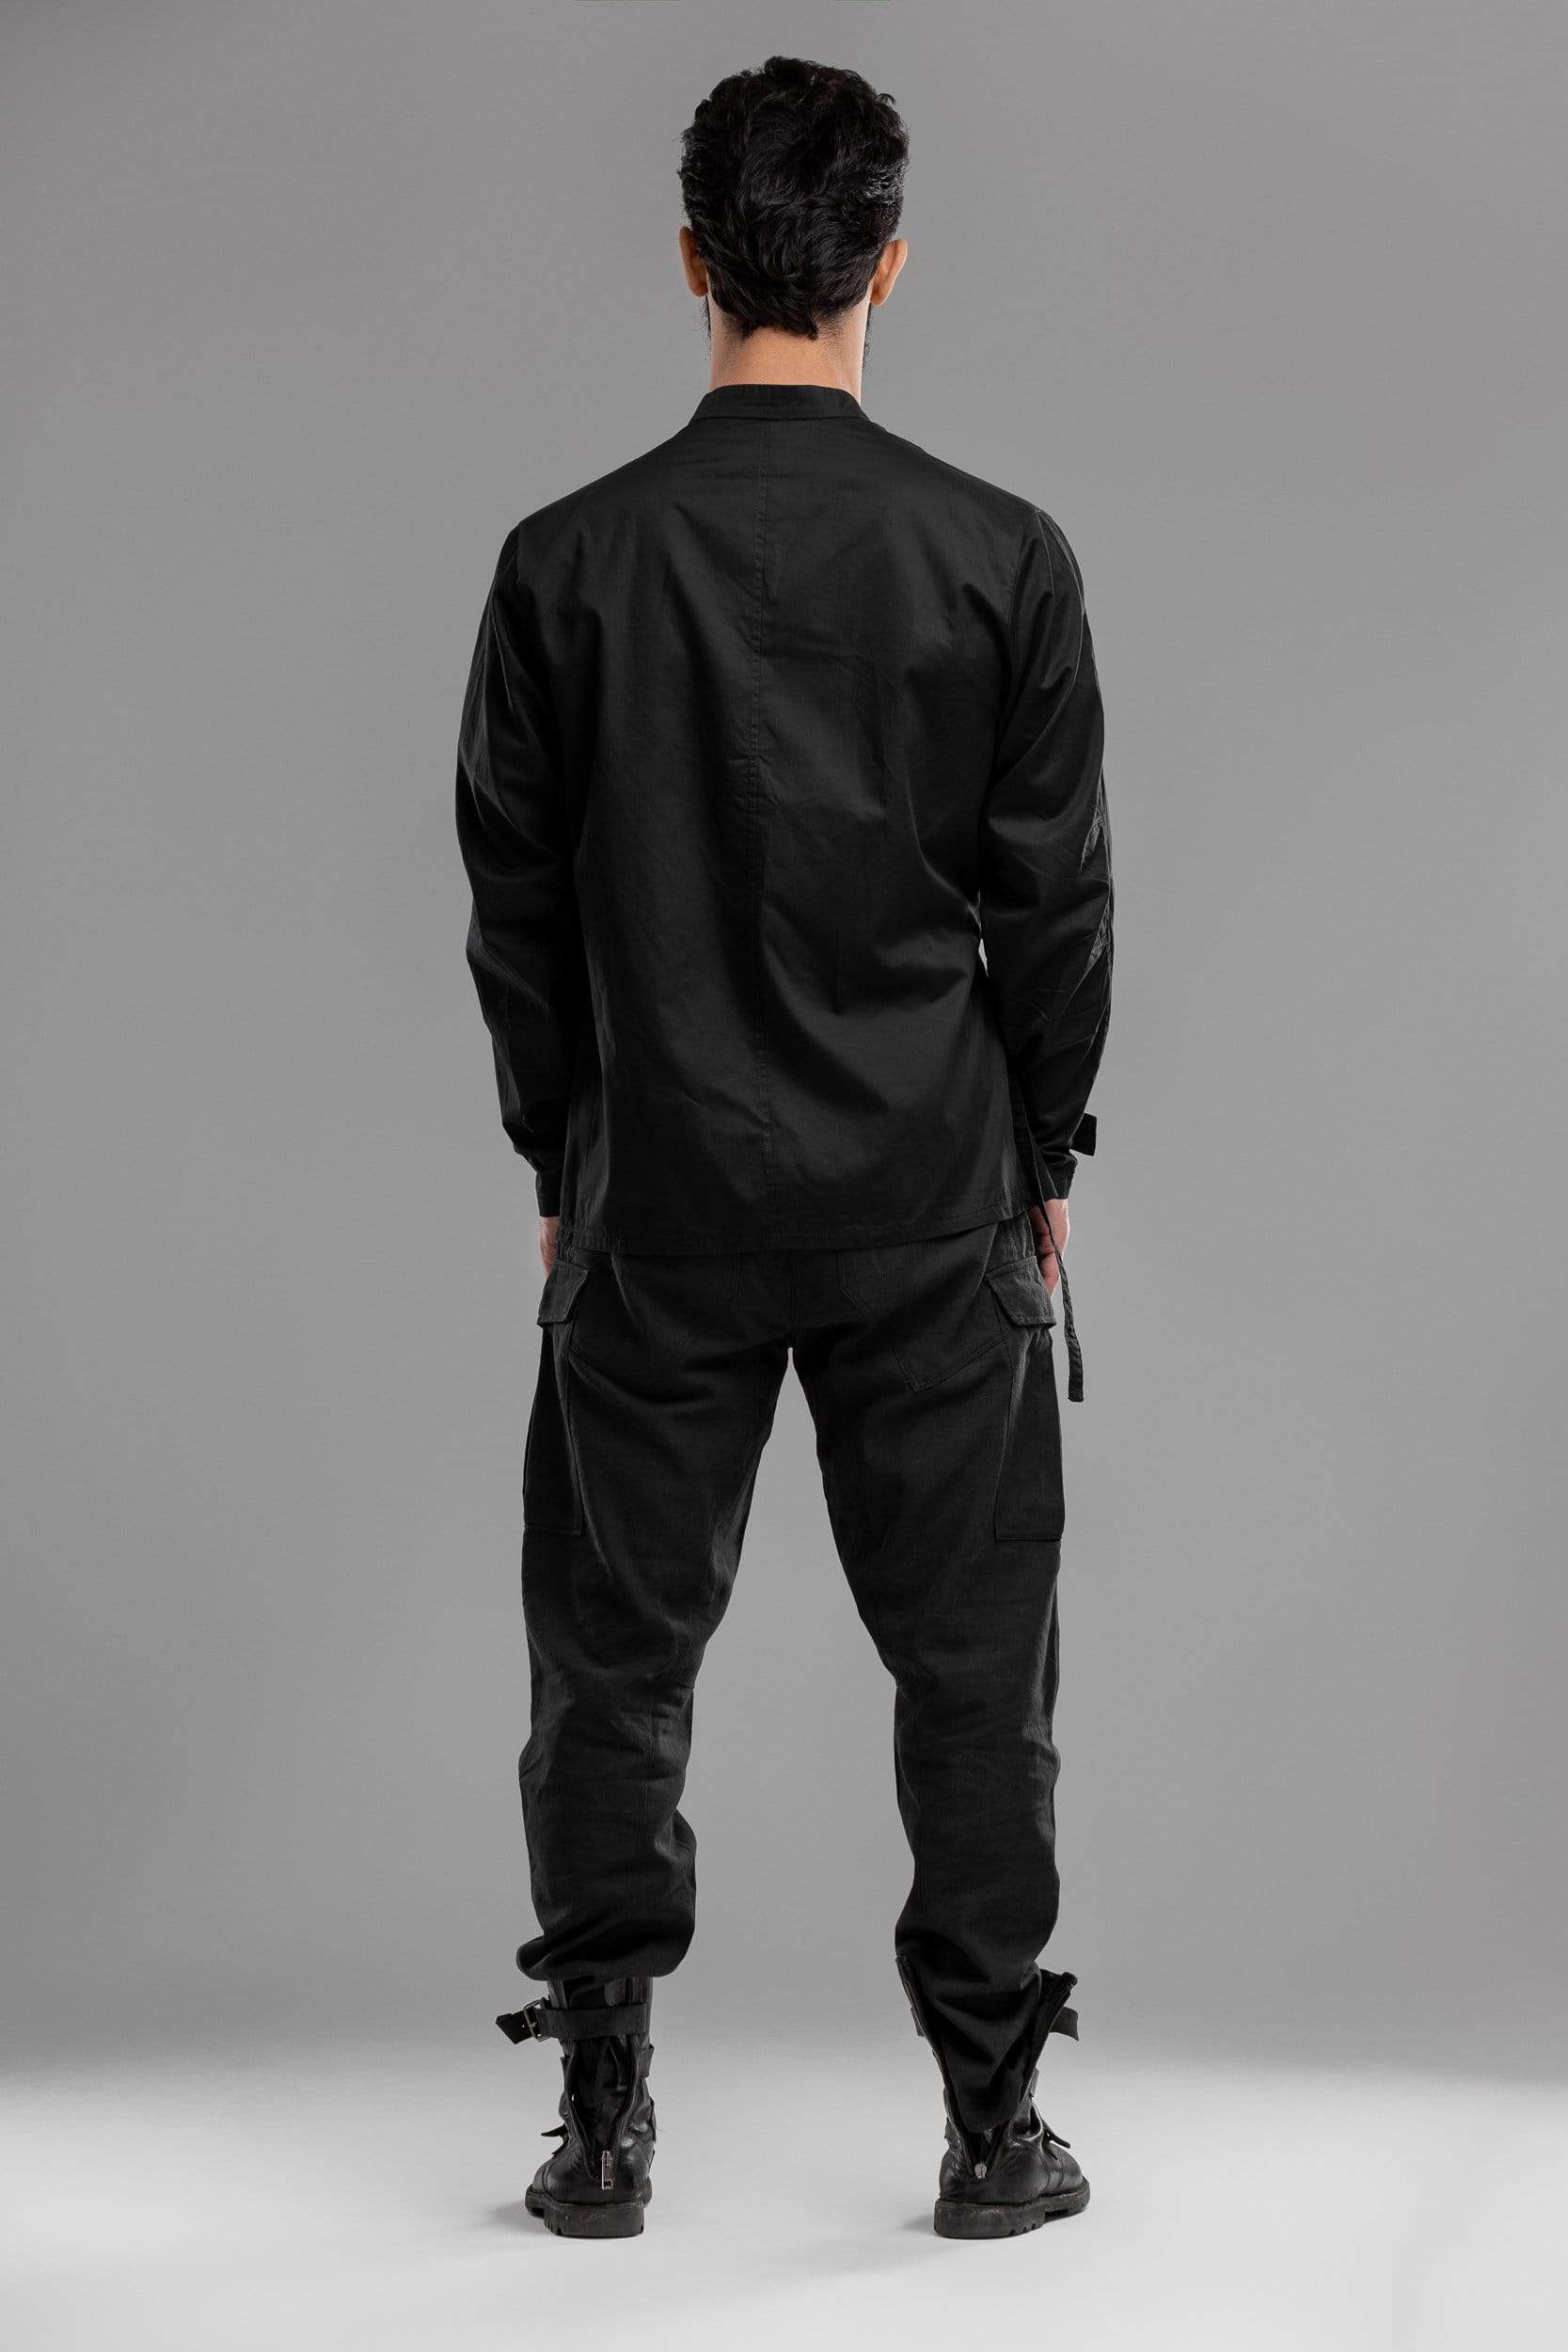 MDNT45 Coats & Jackets for Man Men's shirt Saigo